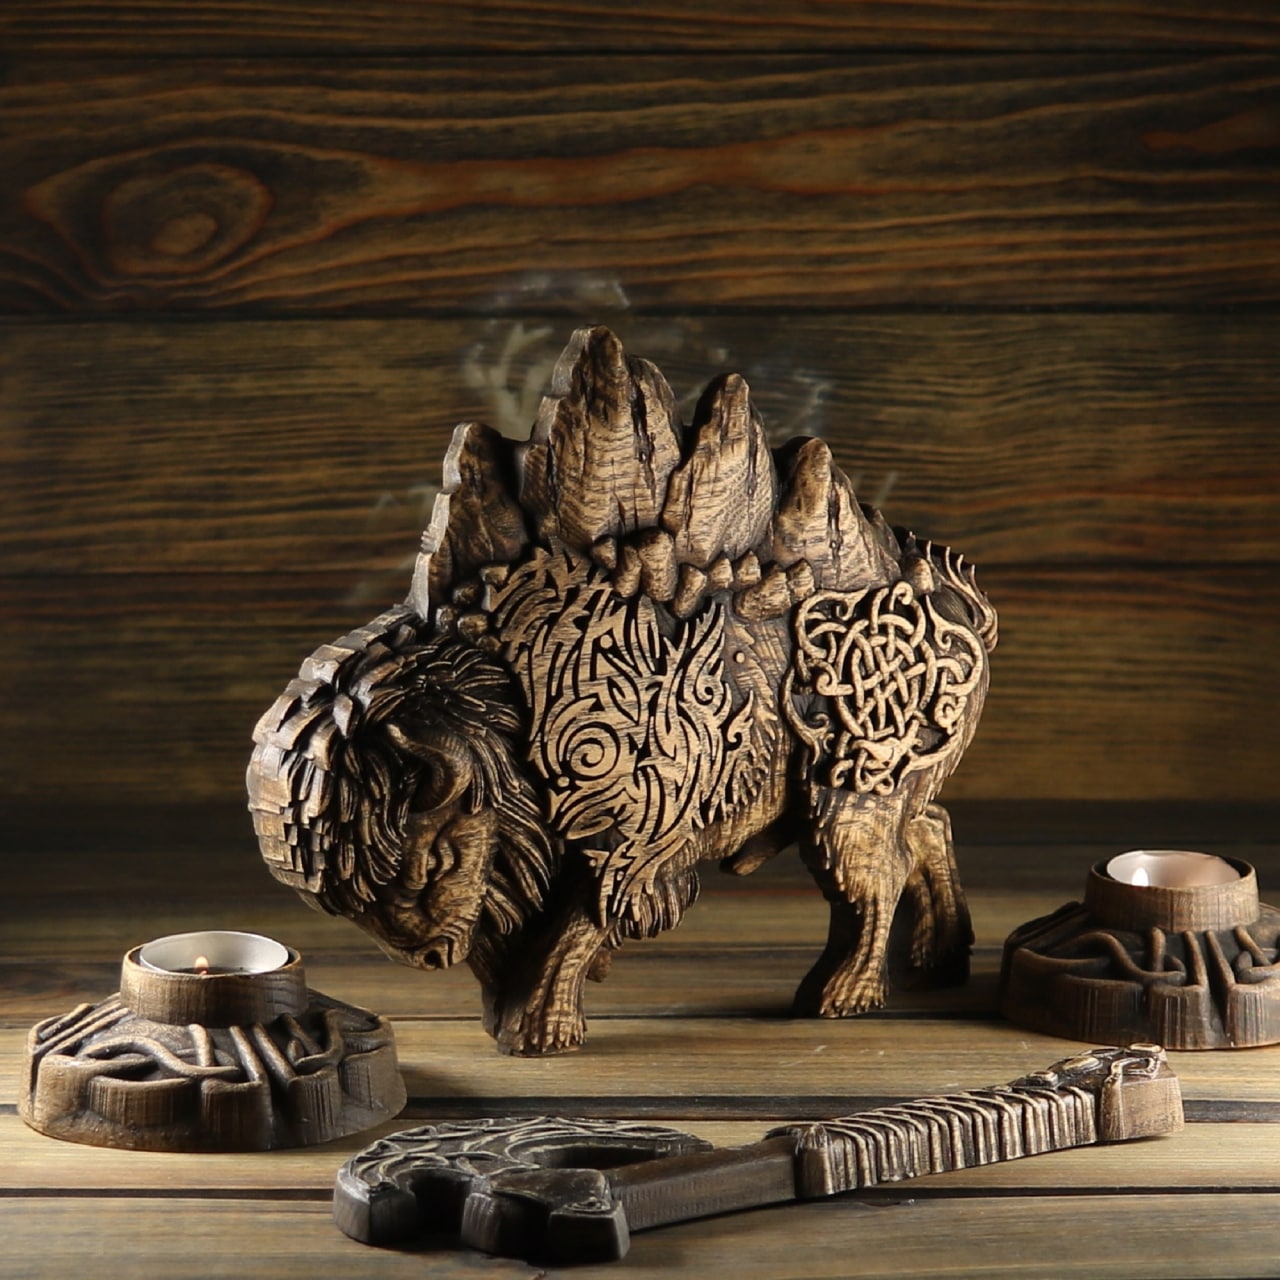 Buffalo, Bison figurine, wooden statue